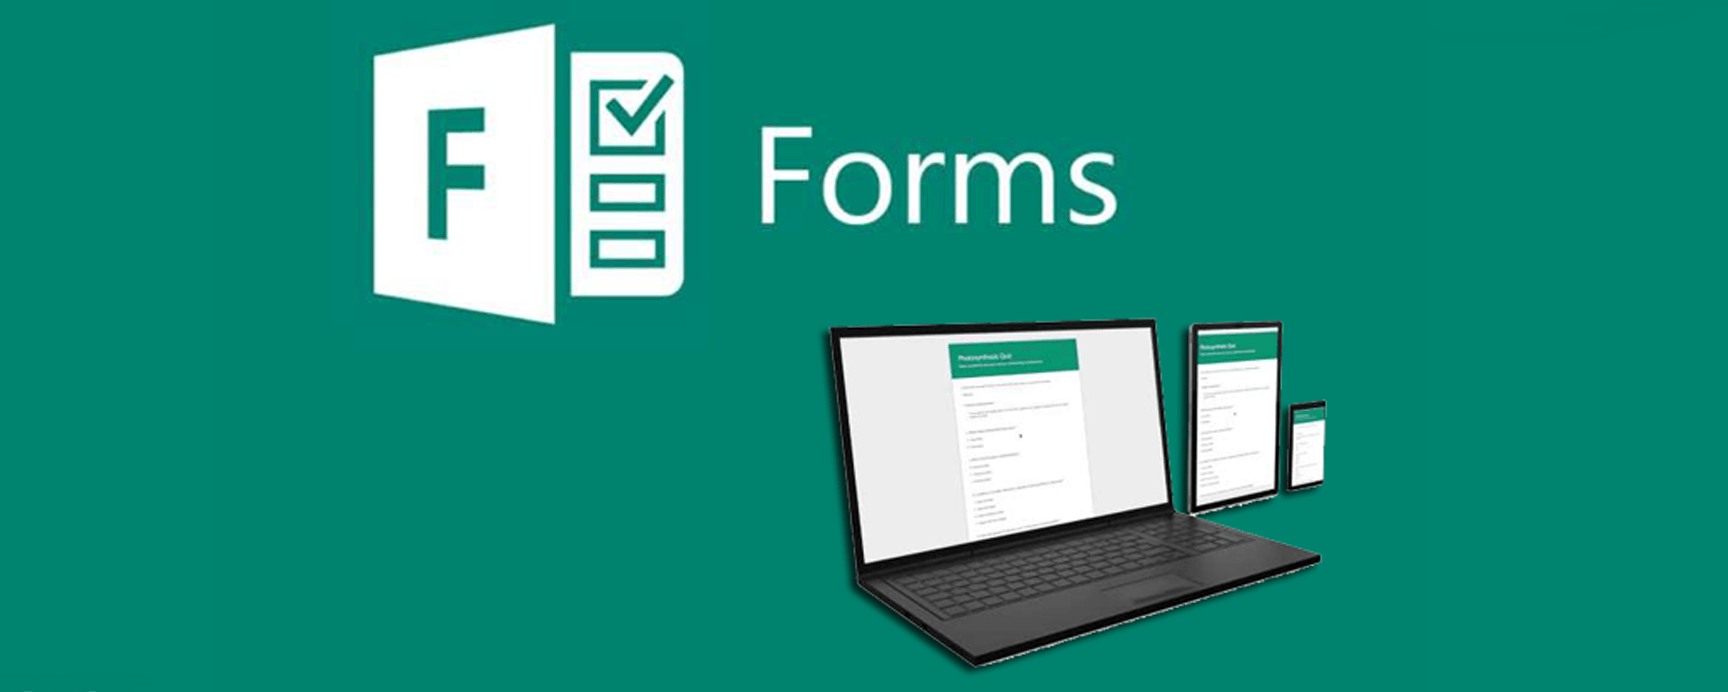 Microsoft Forms Logo Logodix